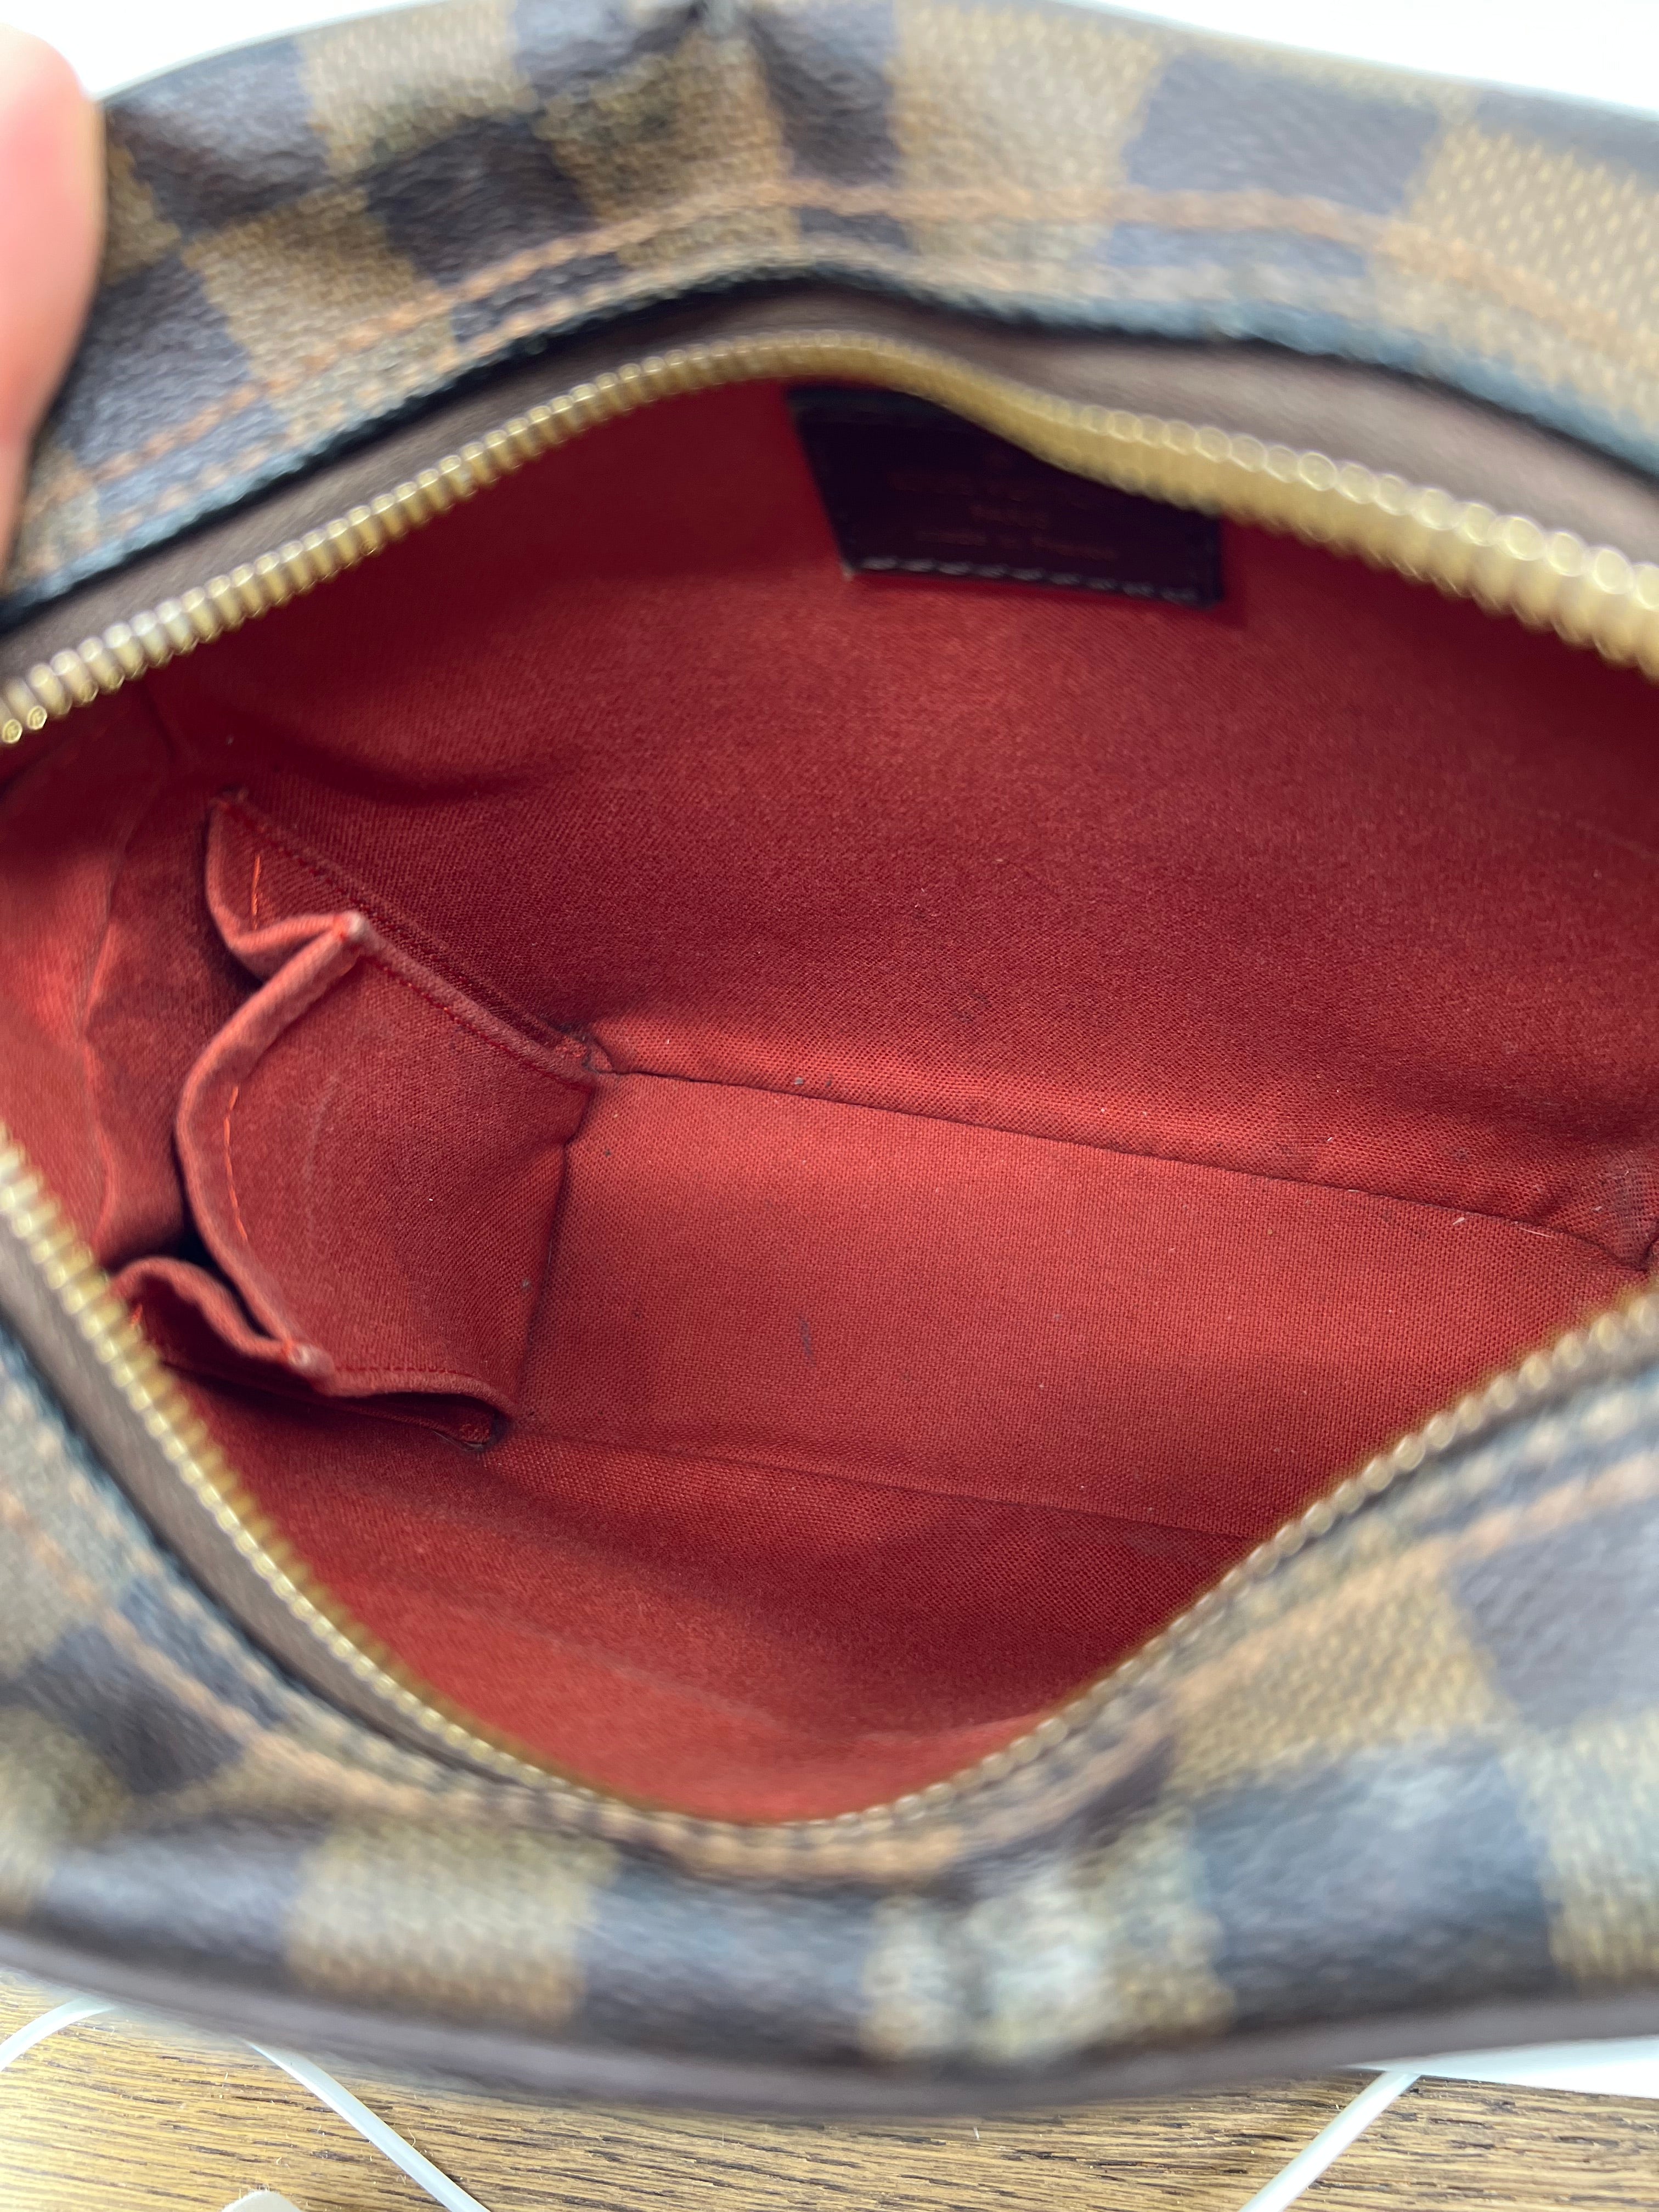 Louis Vuitton Olav Handbag Damier MM - ShopStyle Shoulder Bags